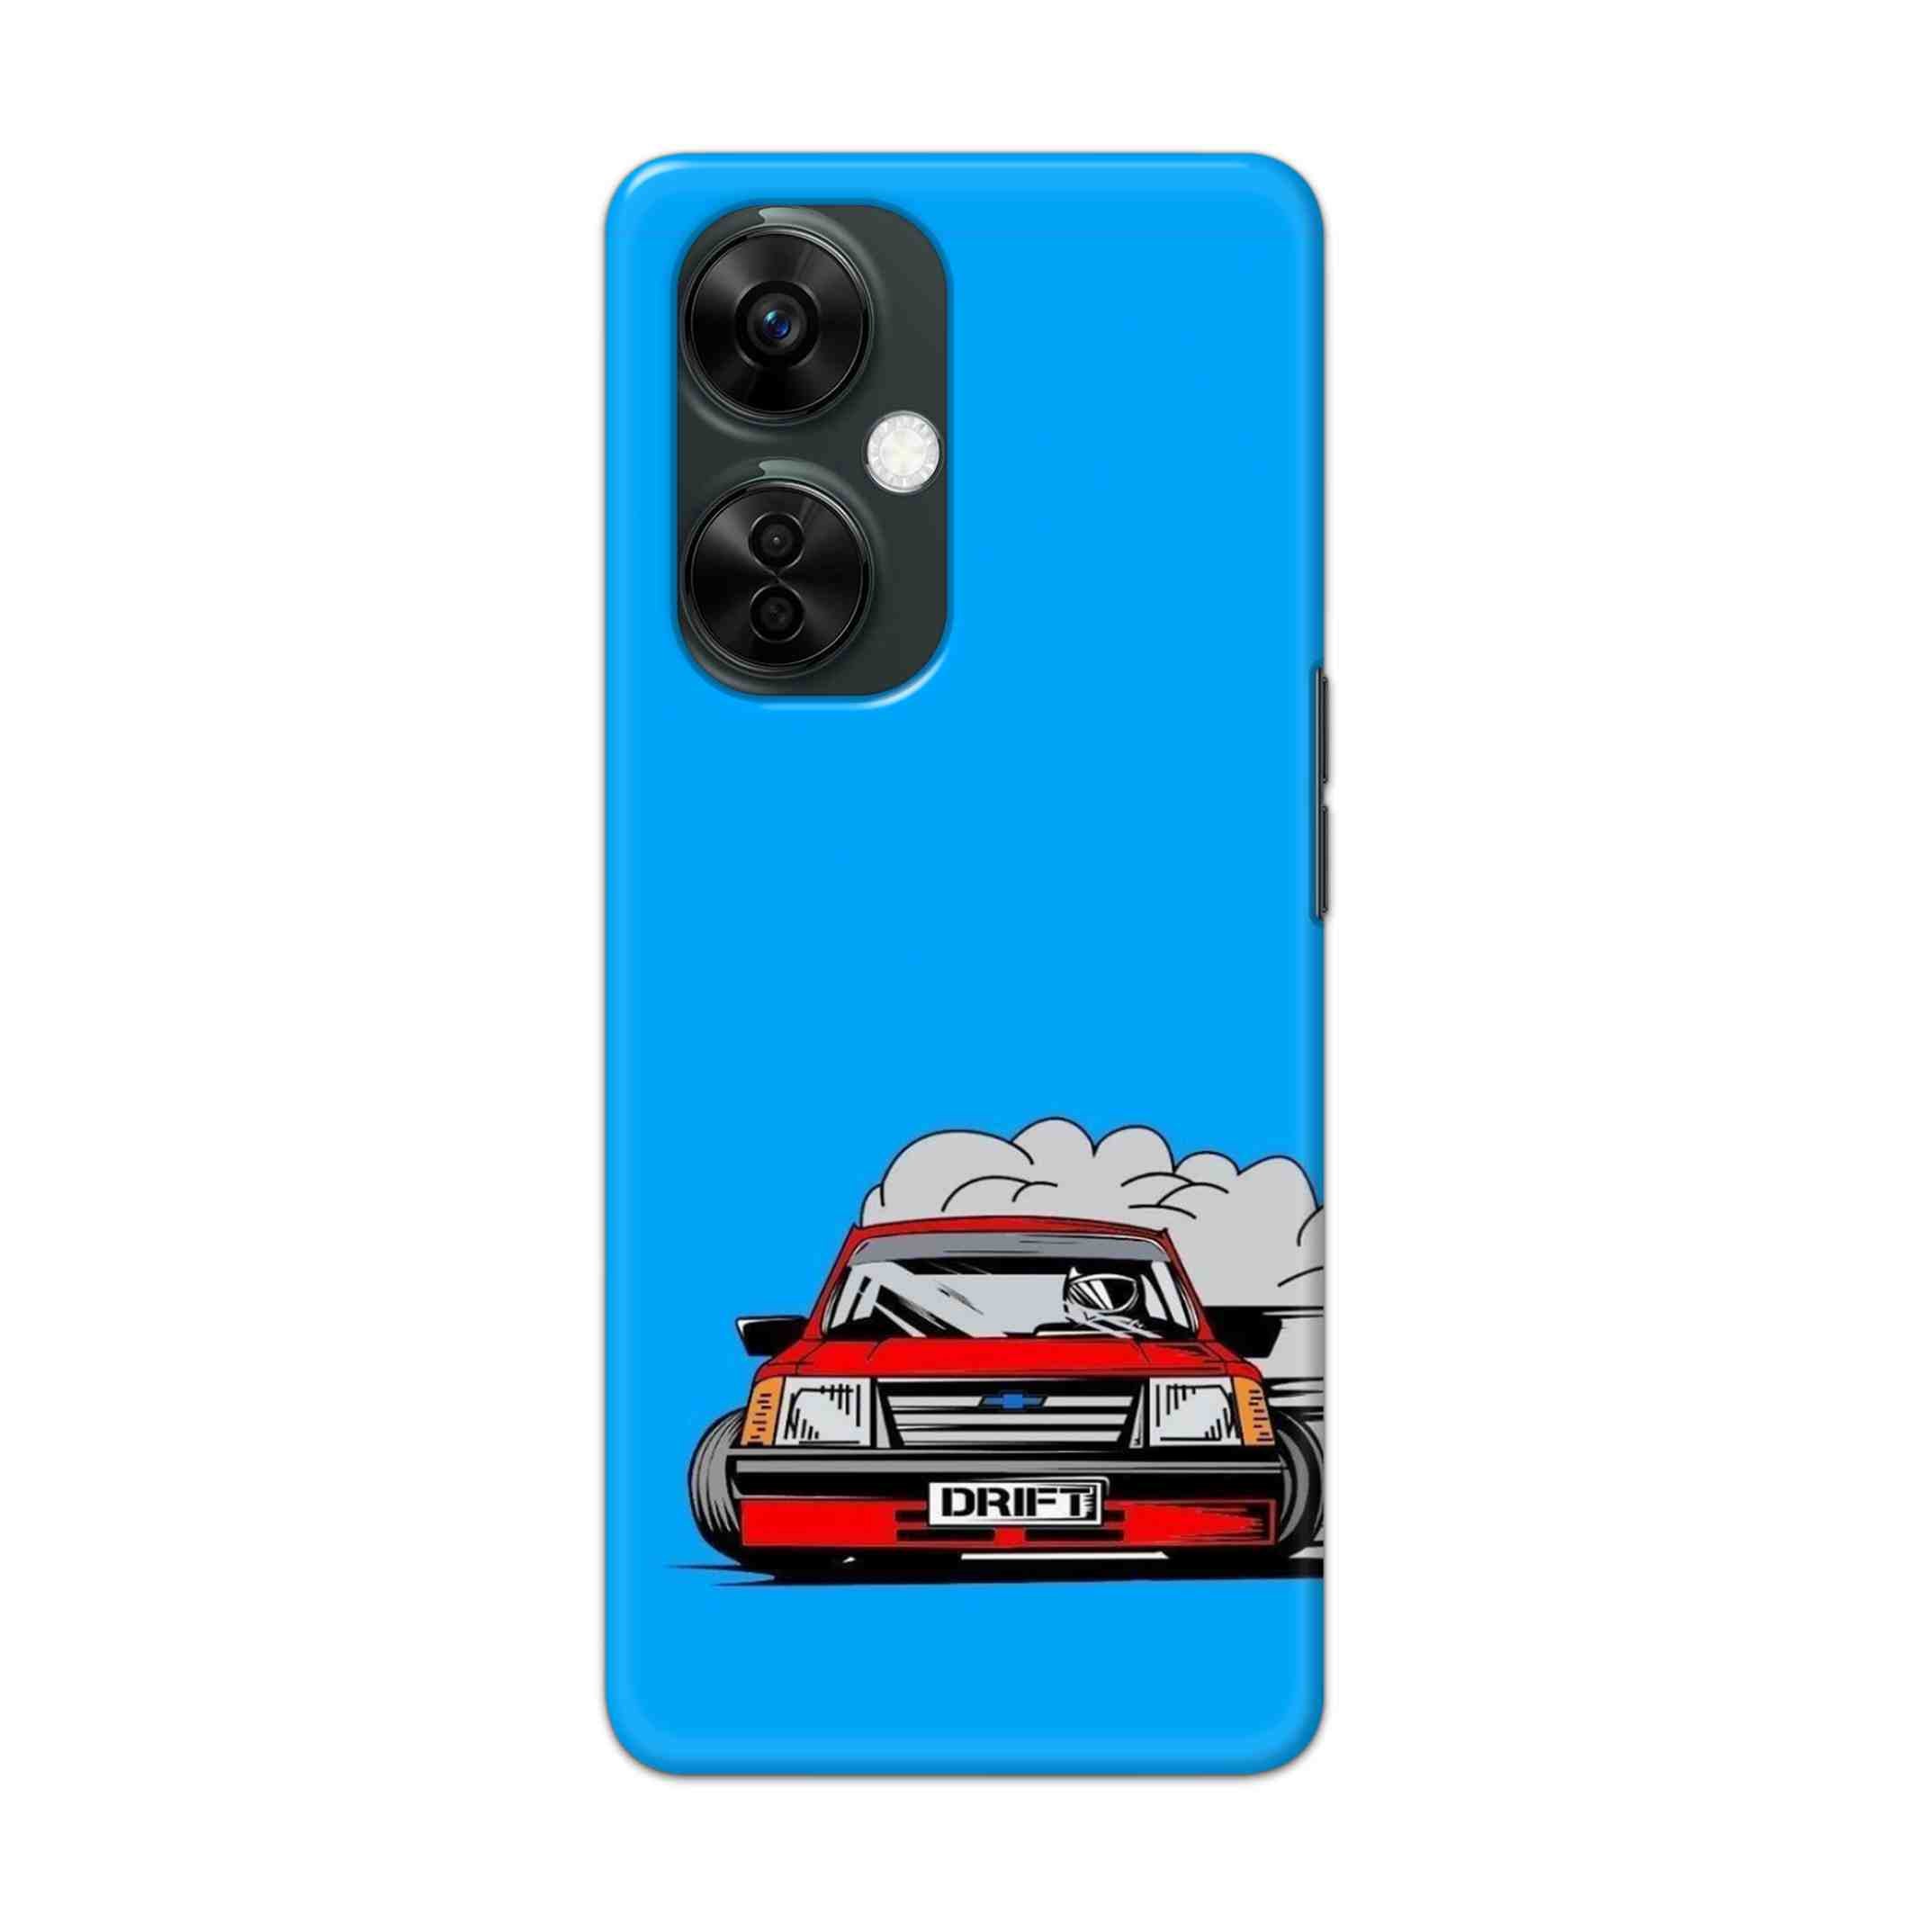 Buy Drift Hard Back Mobile Phone Case Cover For Oneplus Nord CE 3 Lite Online